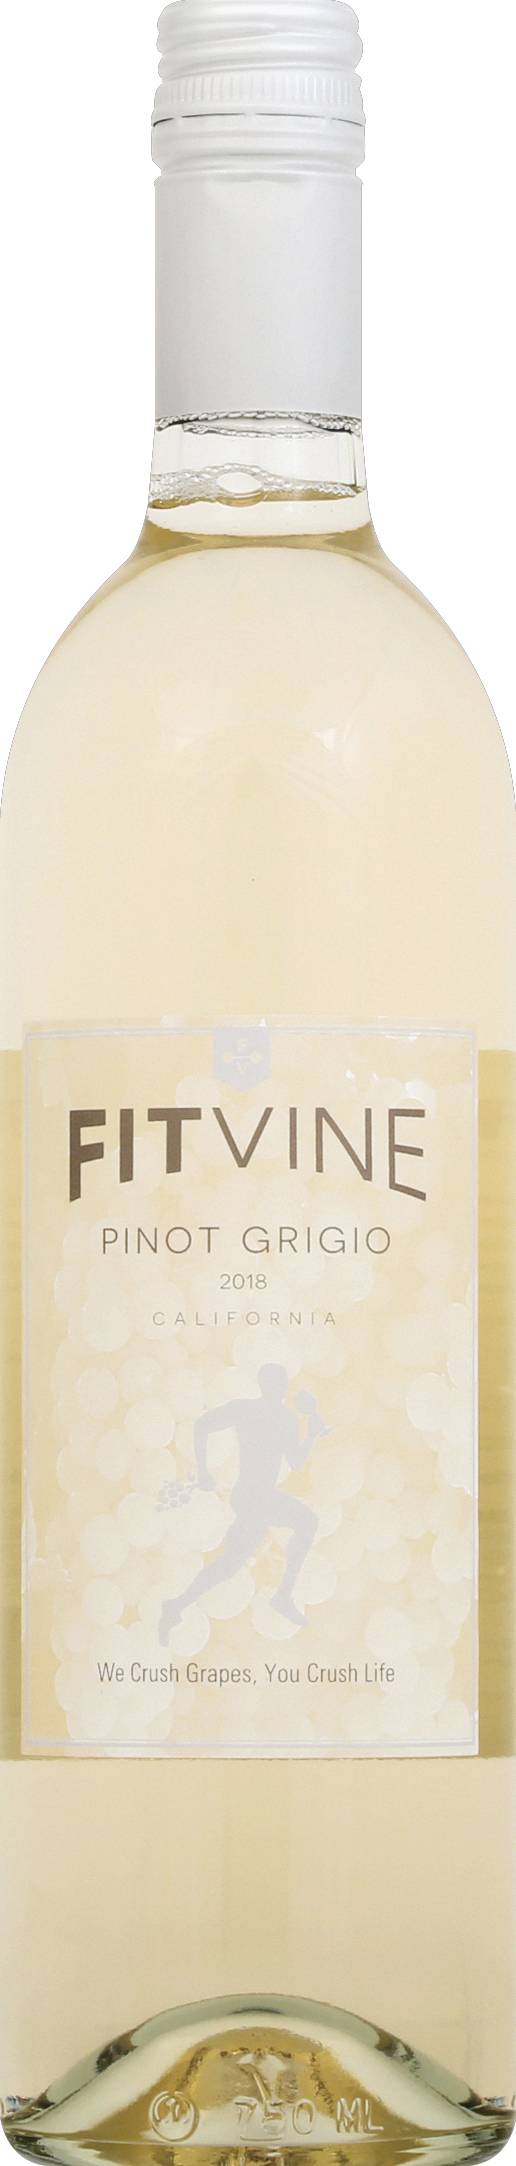 Fitvine California Pinot Grigio White Wine (750 ml)